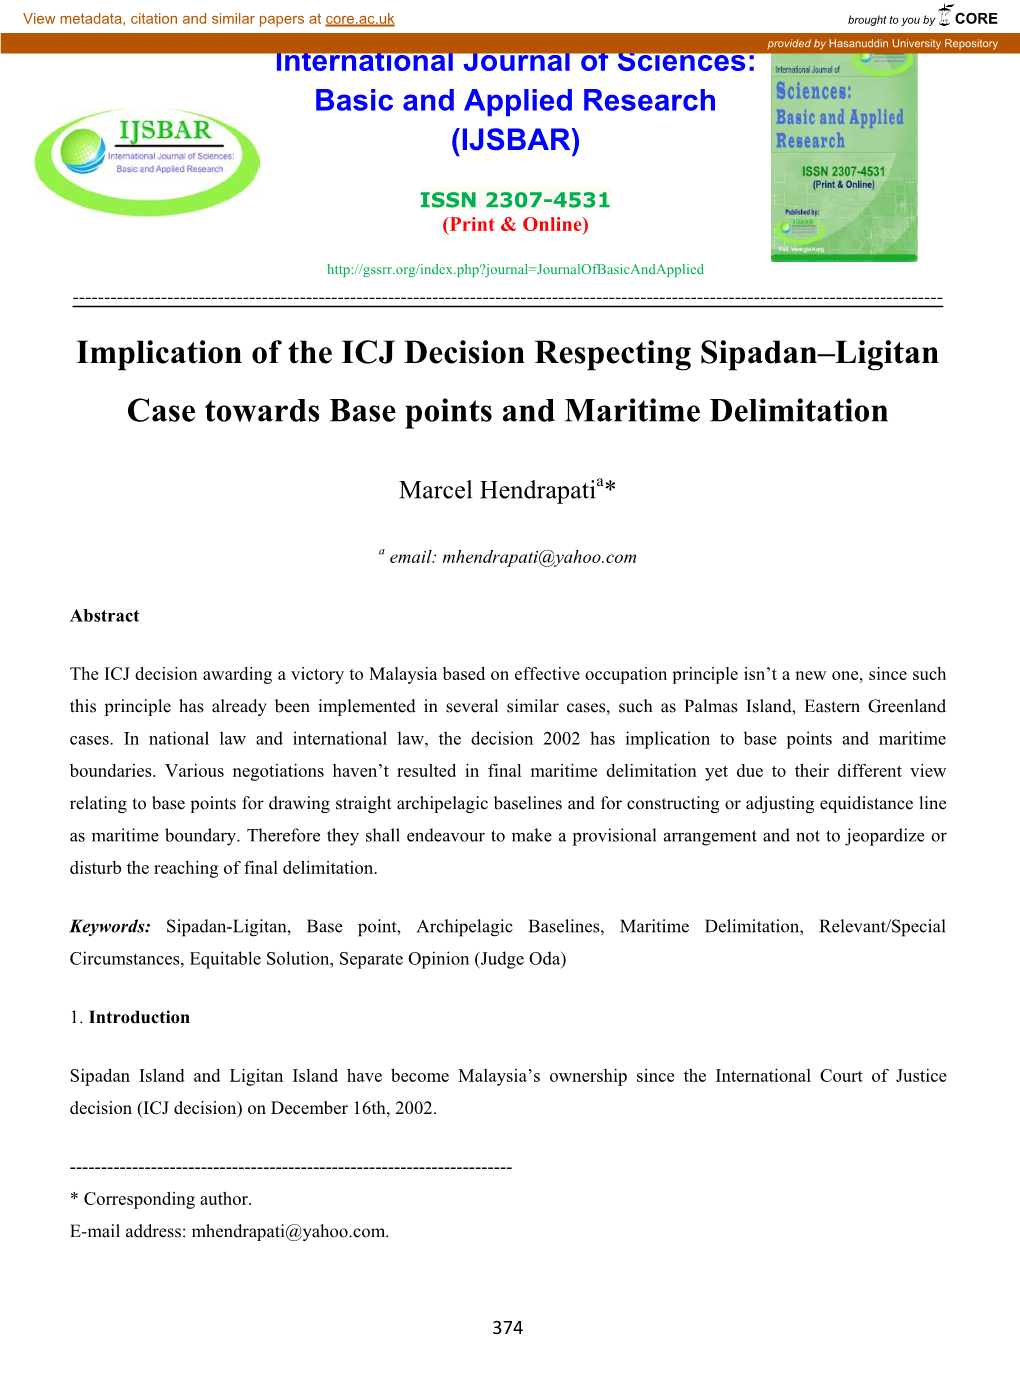 Implication of the ICJ Decision Respecting Sipadan–Ligitan Case Towards Base Points and Maritime Delimitation